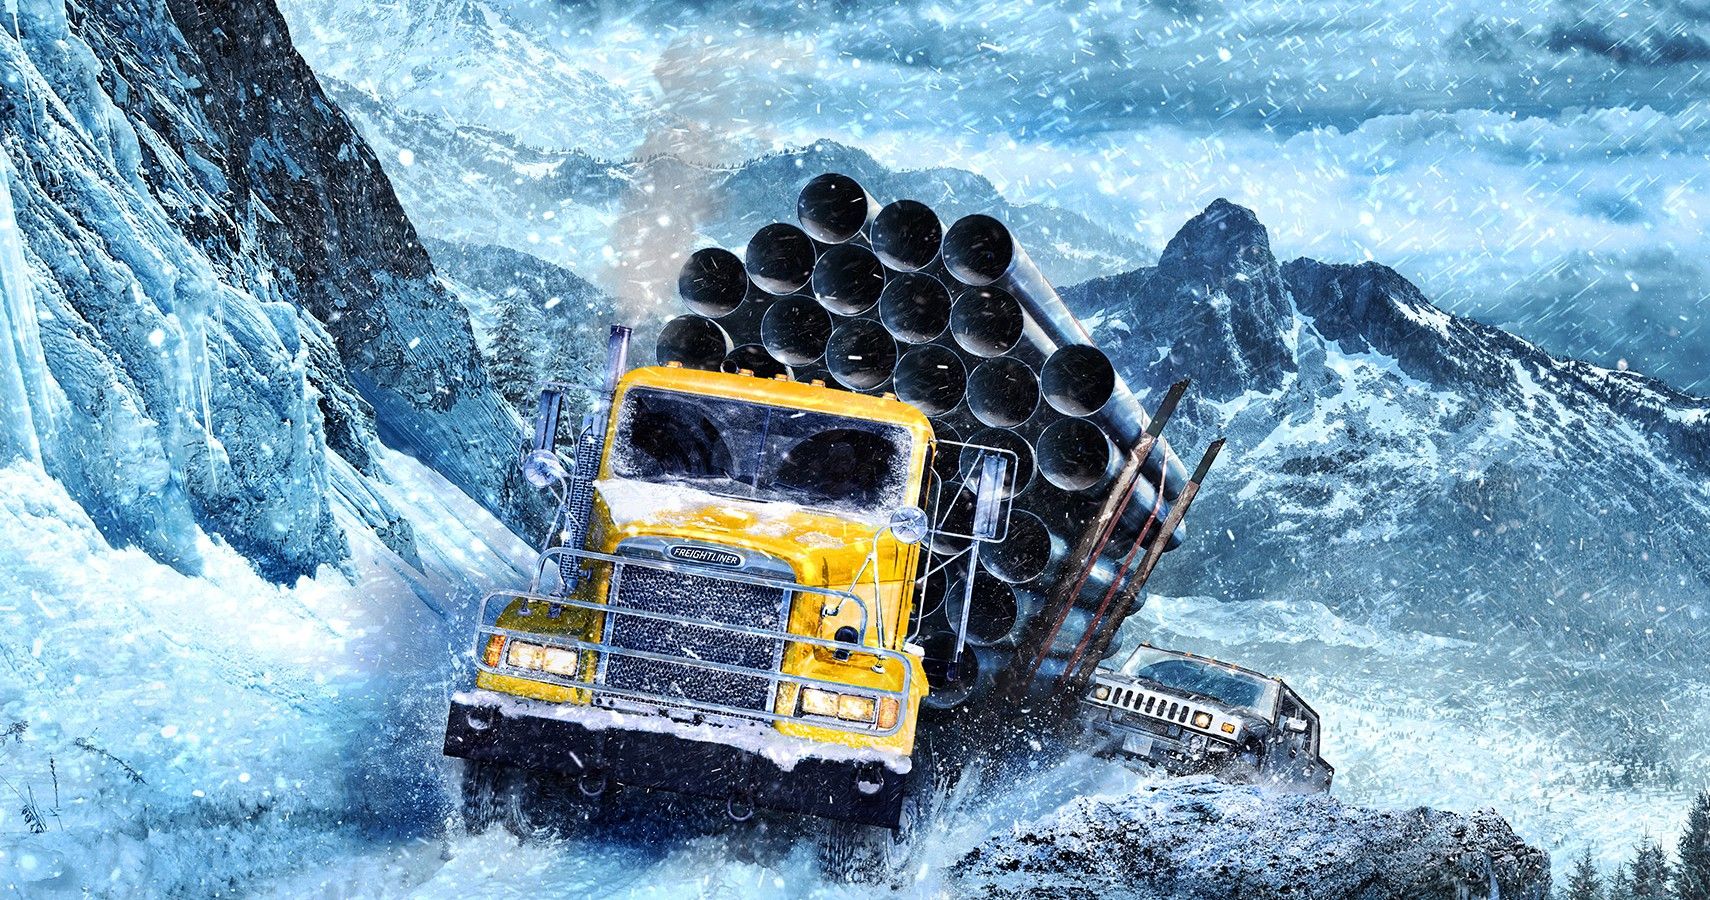 box art image snowrunner yellow truck carrying metal cargo